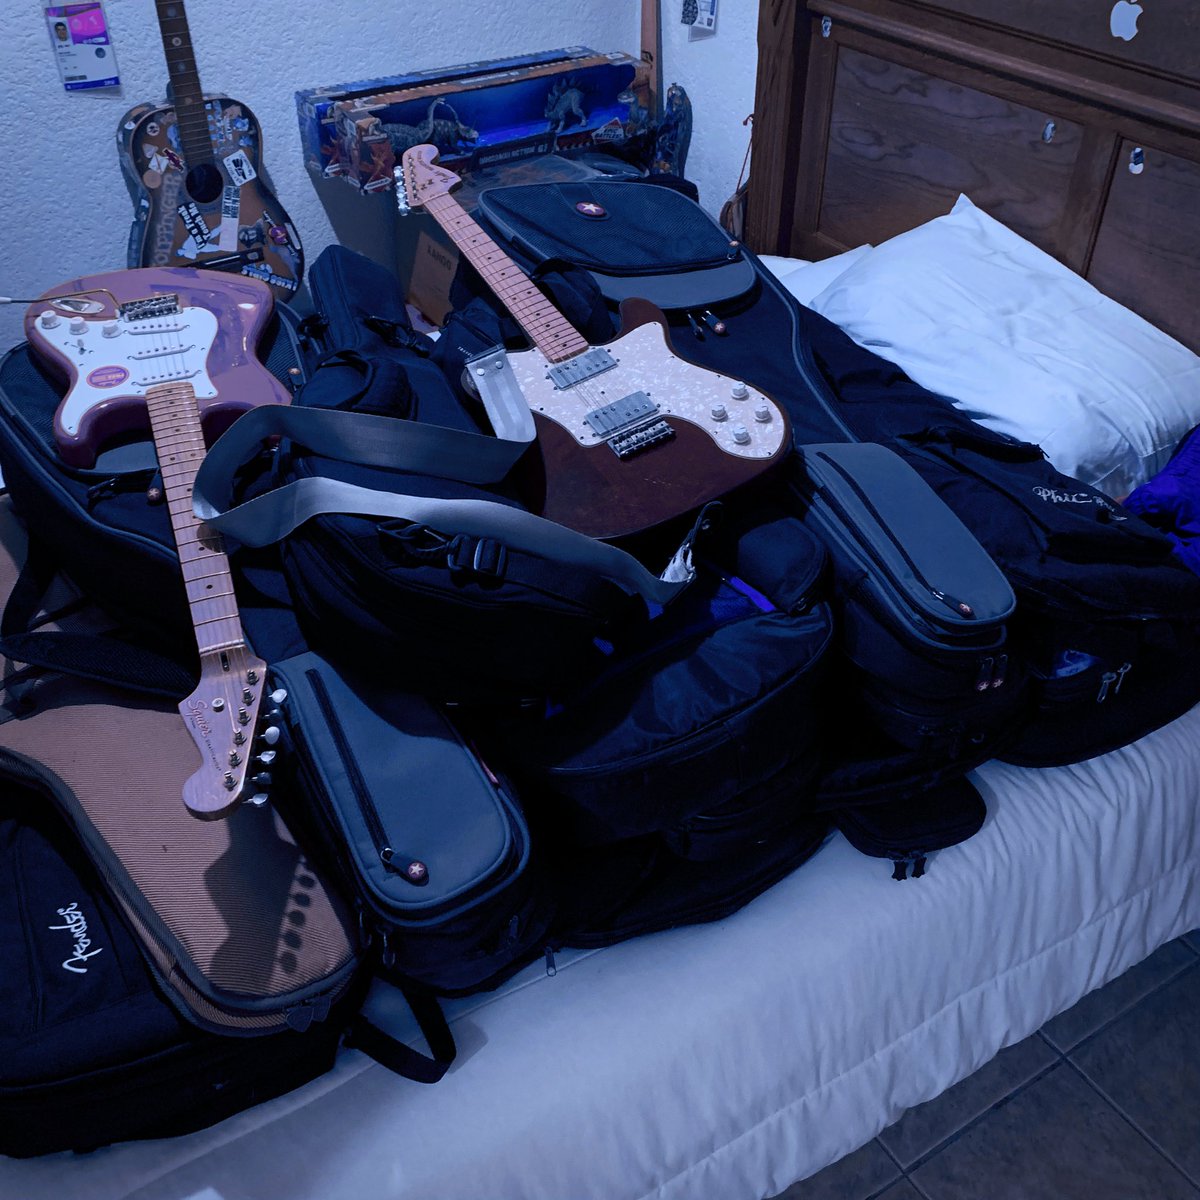 Ya va siendo hora de dorm…

#Starstuff #Guitarist #Guitar #GuitaristLife #GuitaristProblems #Teletuesday